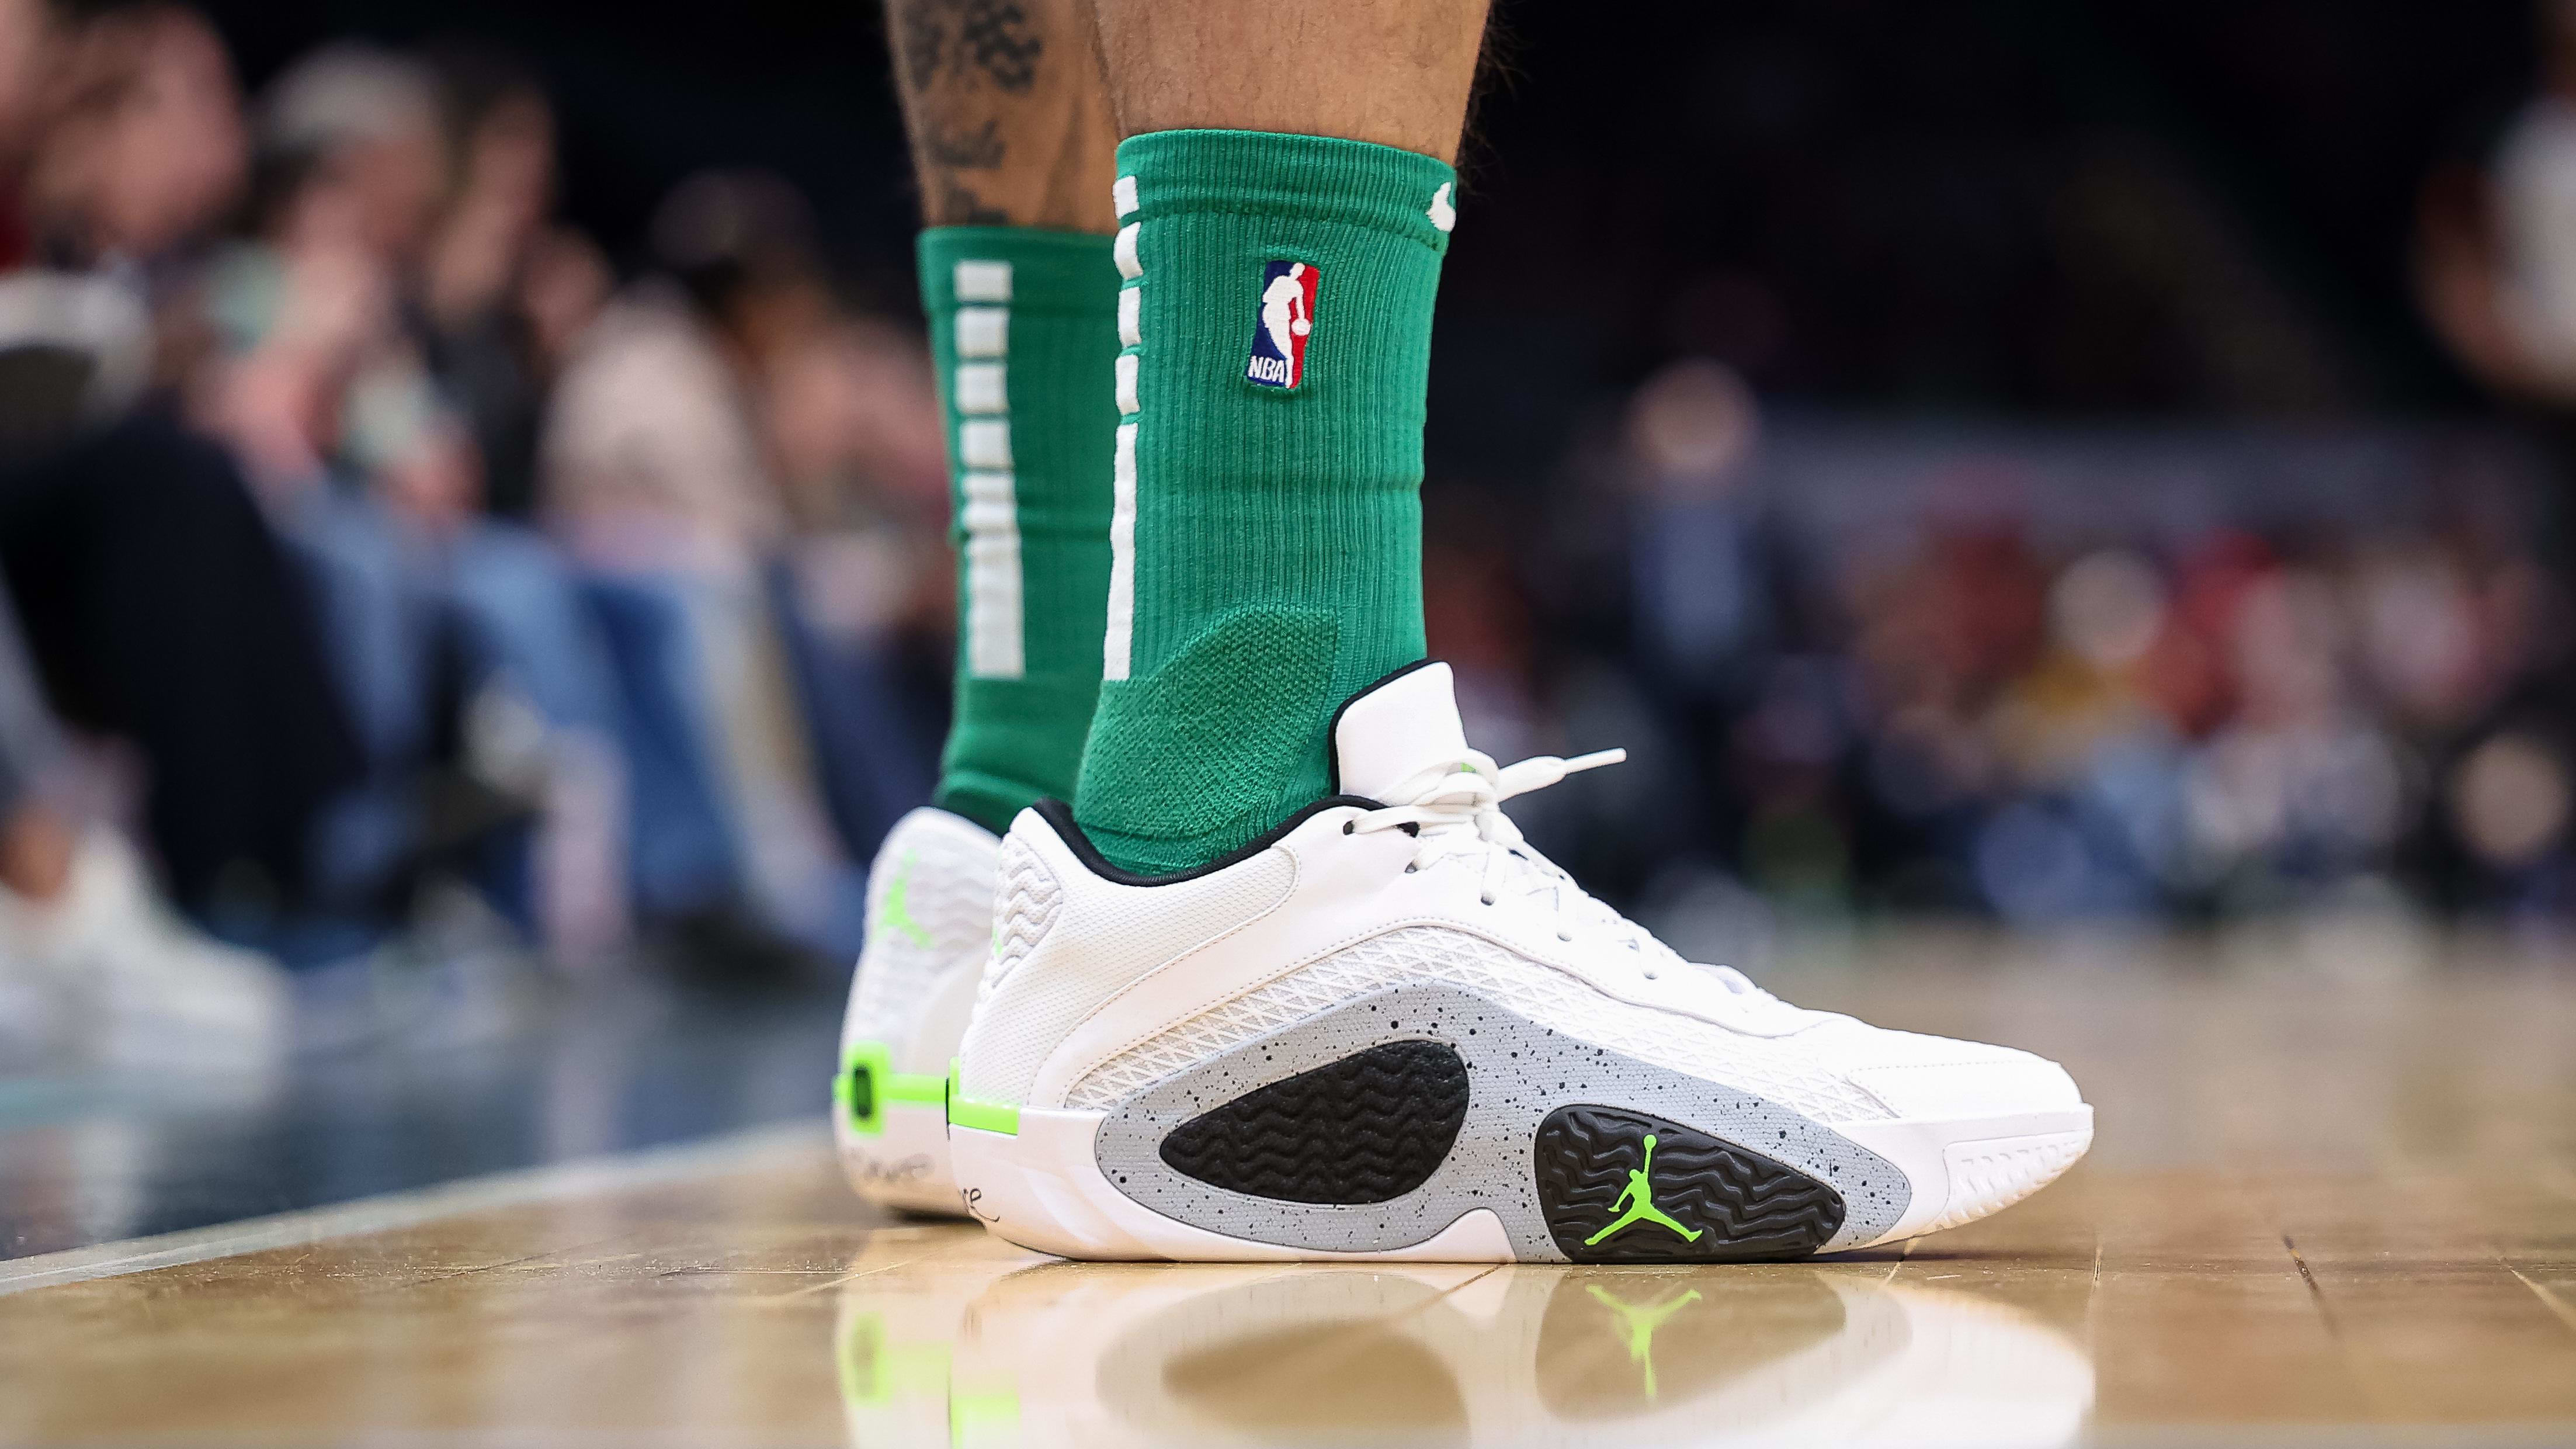 Boston Celtics forward Jayson Tatum's white and green sneakers.